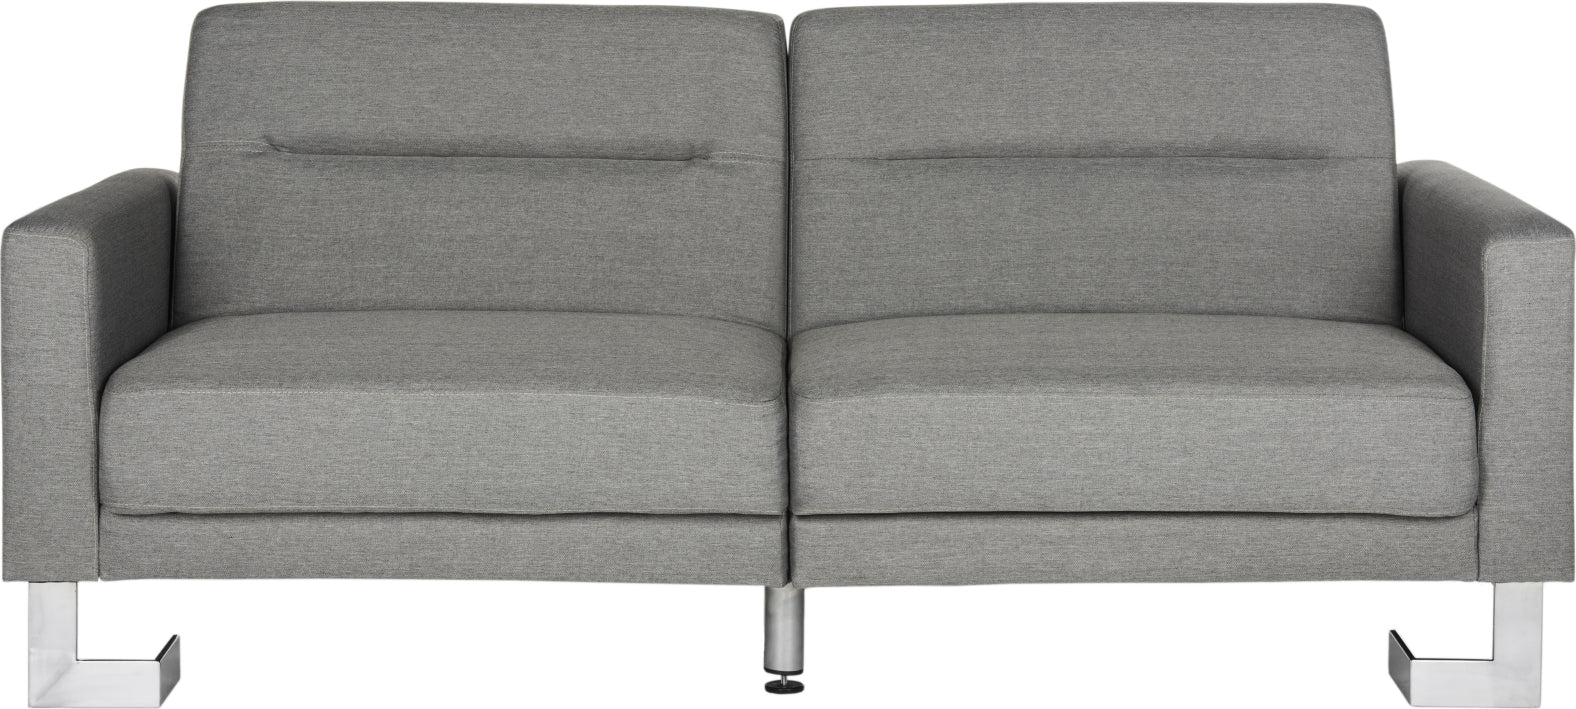 Safavieh Tribeca Foldable Sofa Bed Grey and Silver Furniture main image